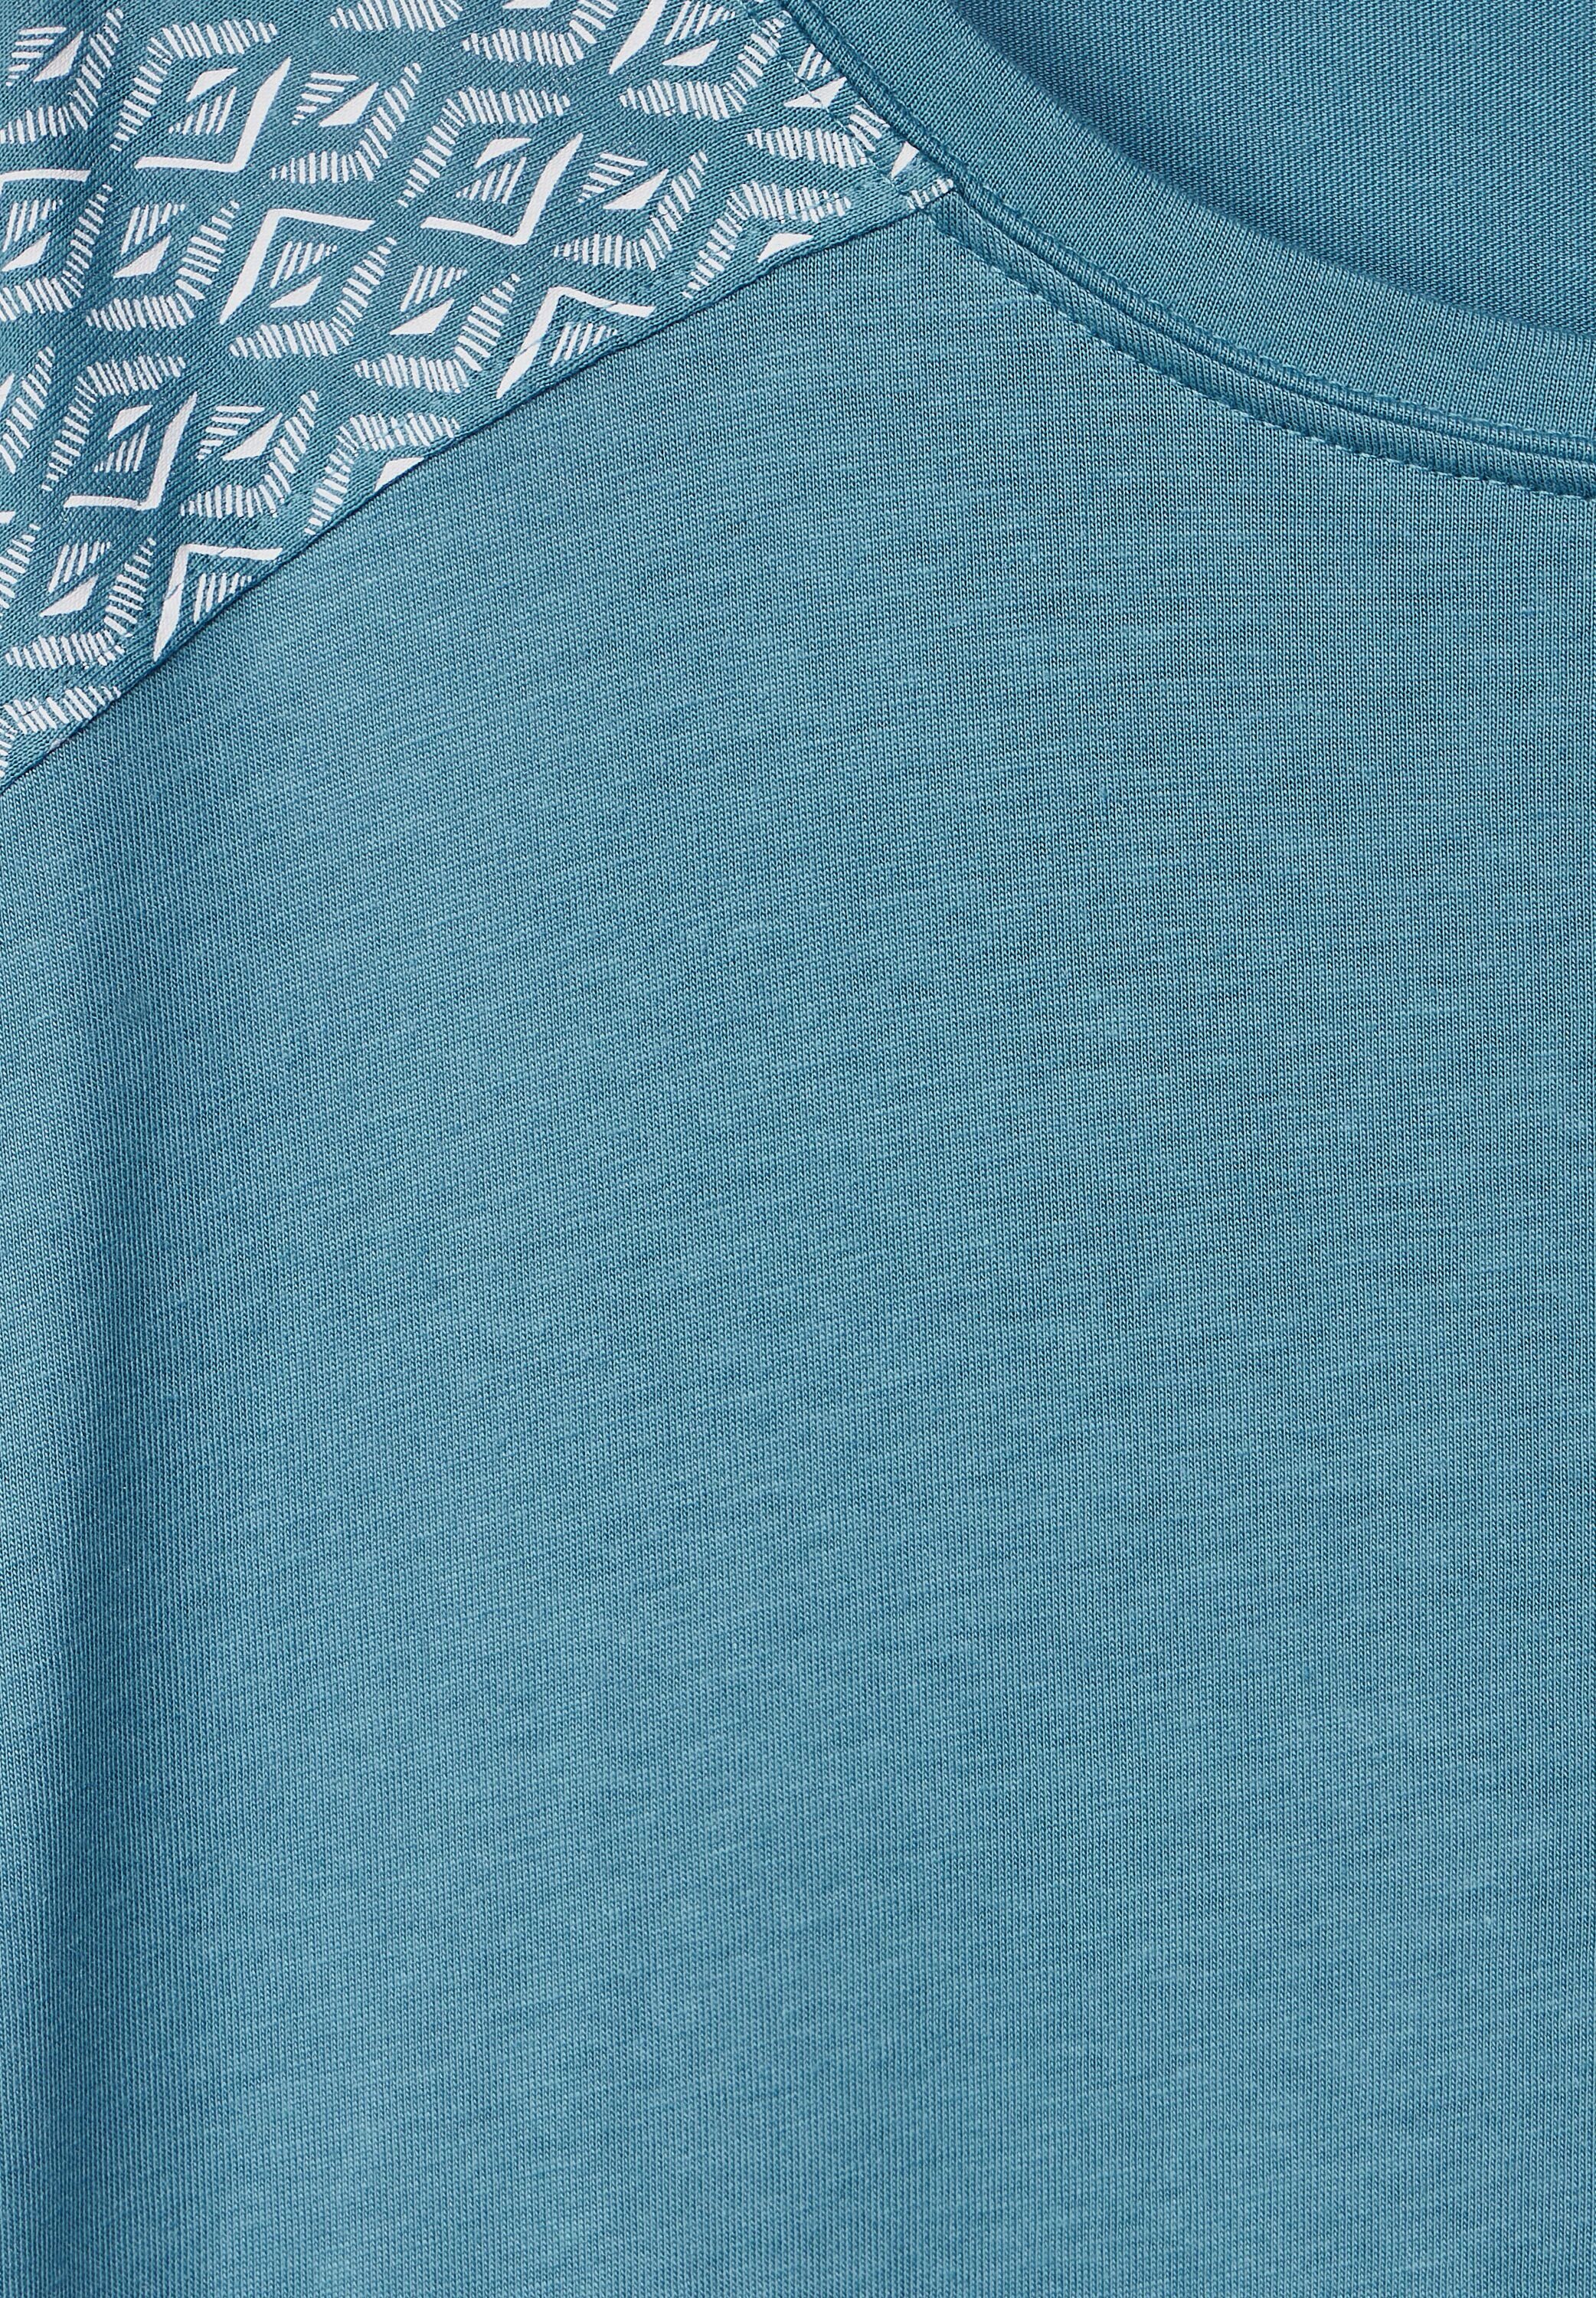 aus blue Cecil T-Shirt softem Materialmix adriatic